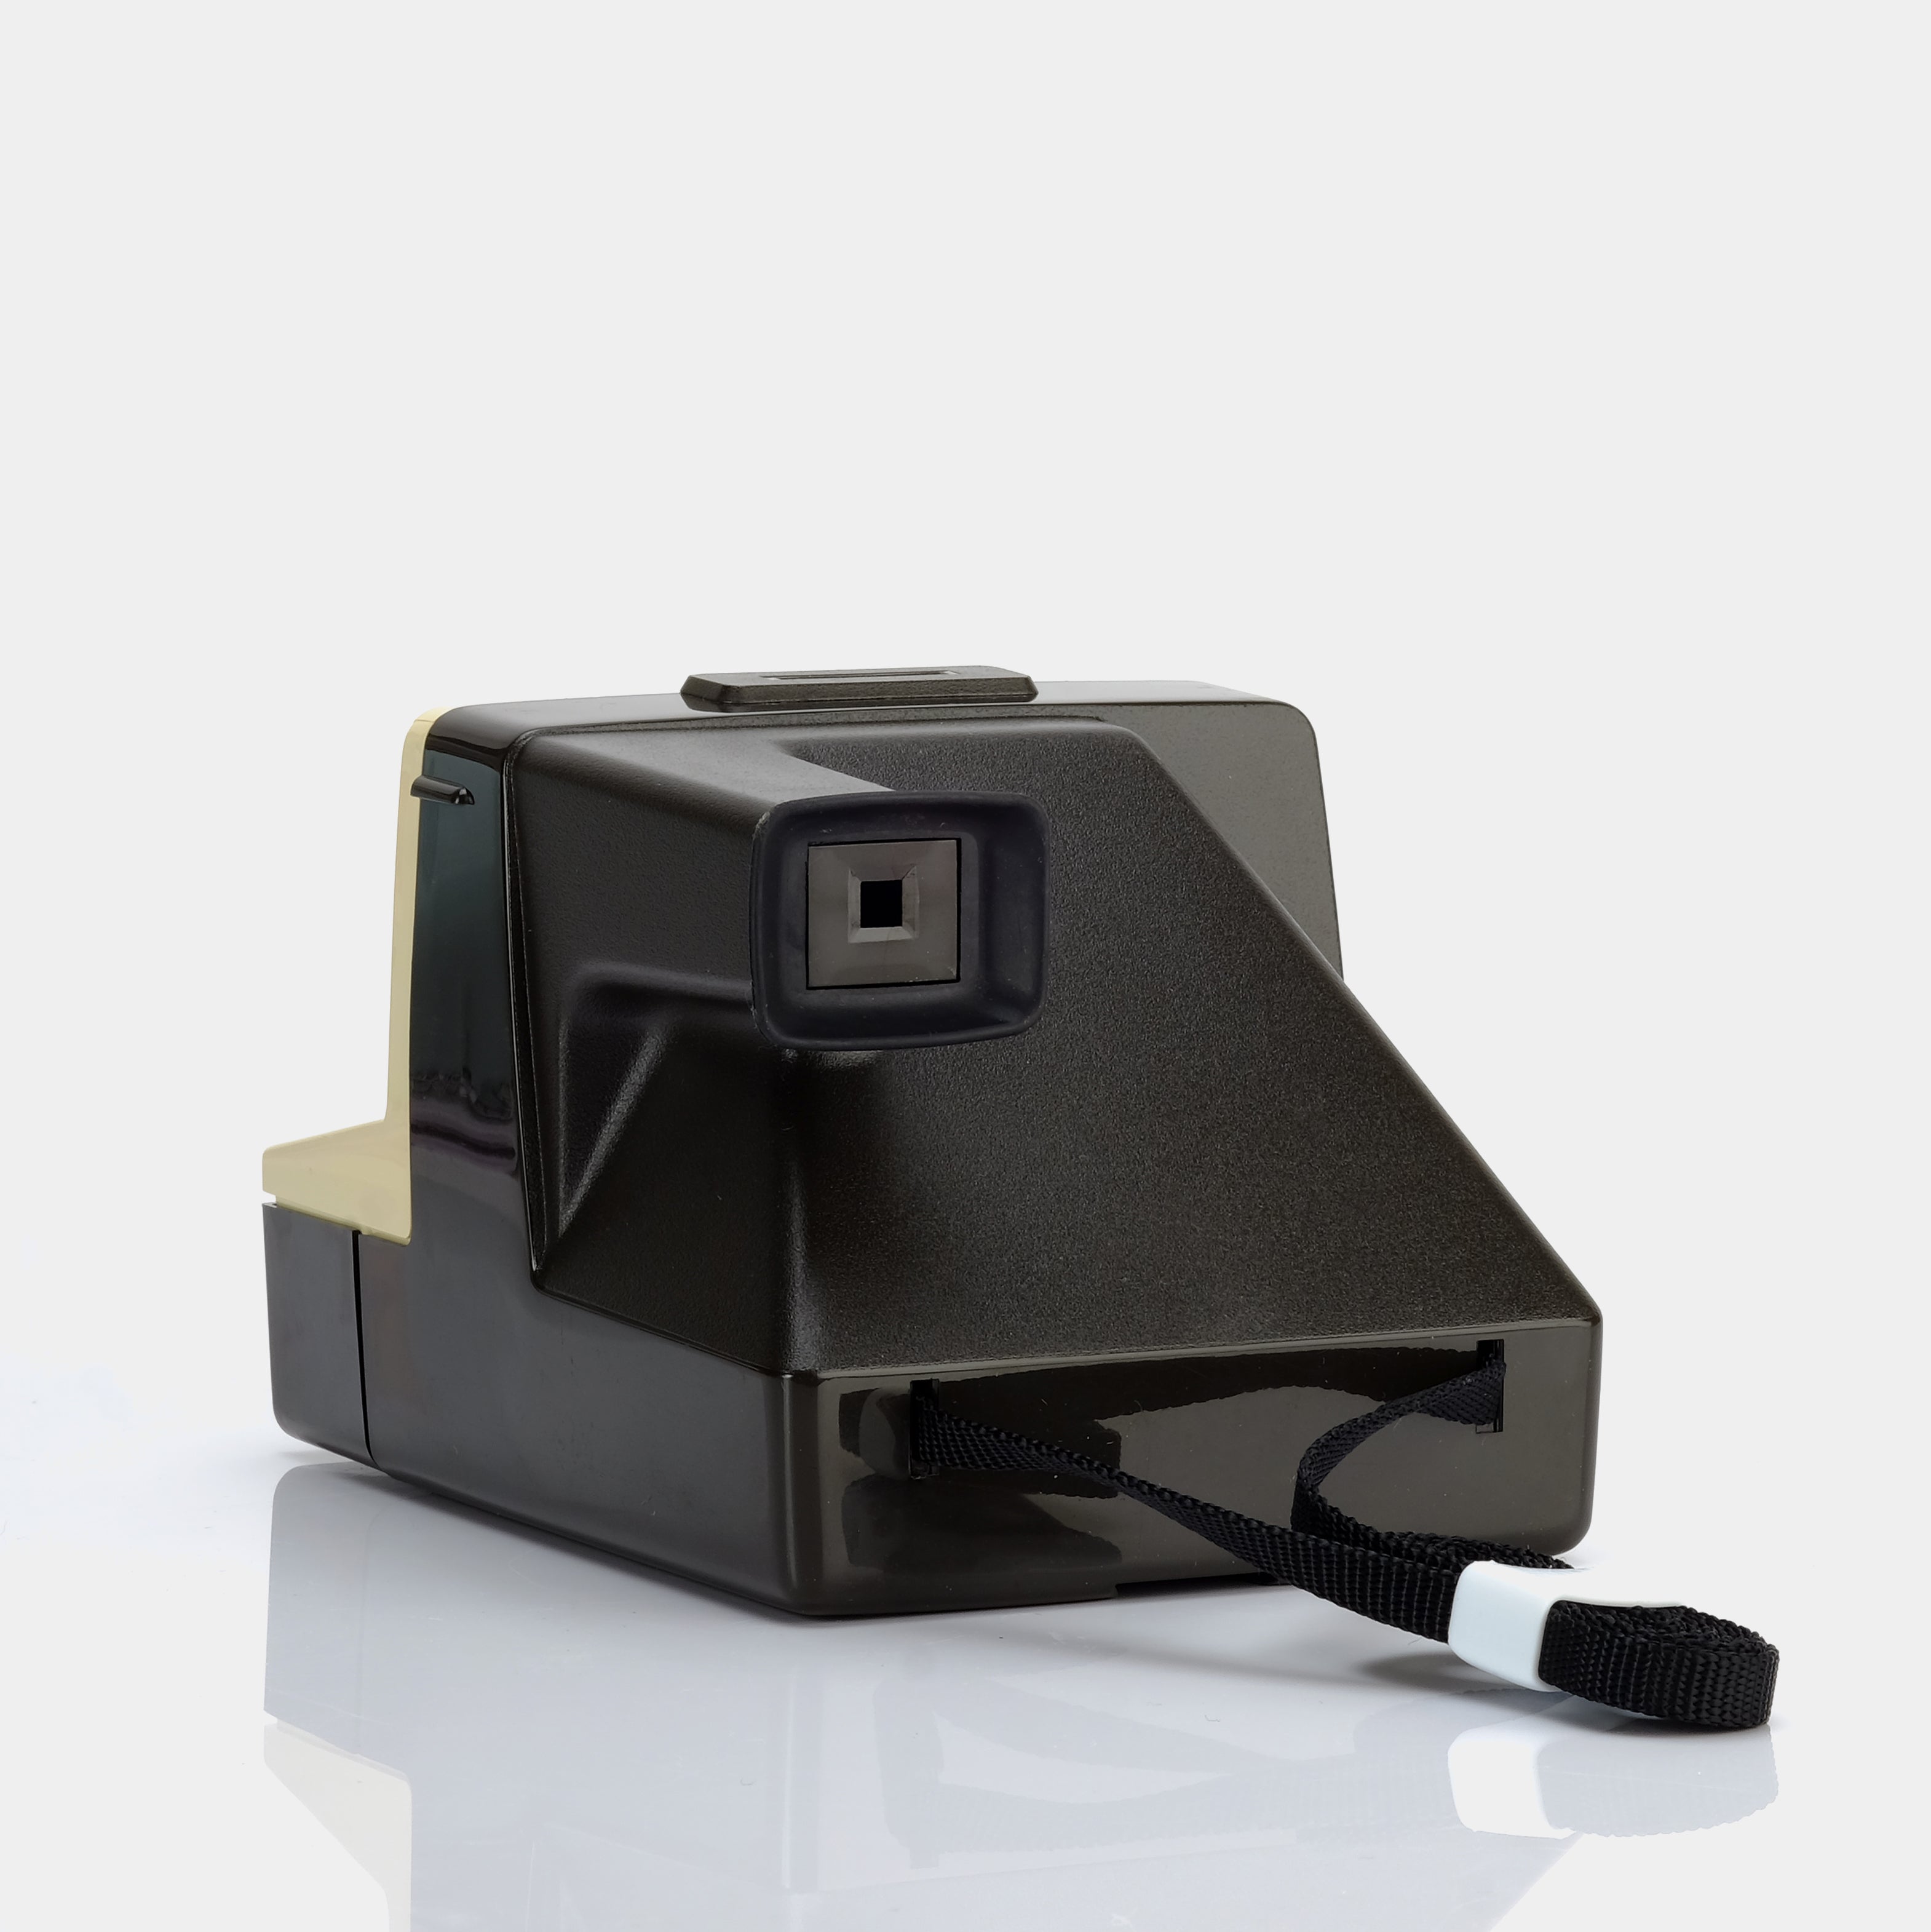 Polaroid SX-70 Sears Special One Step Instant Film Camera